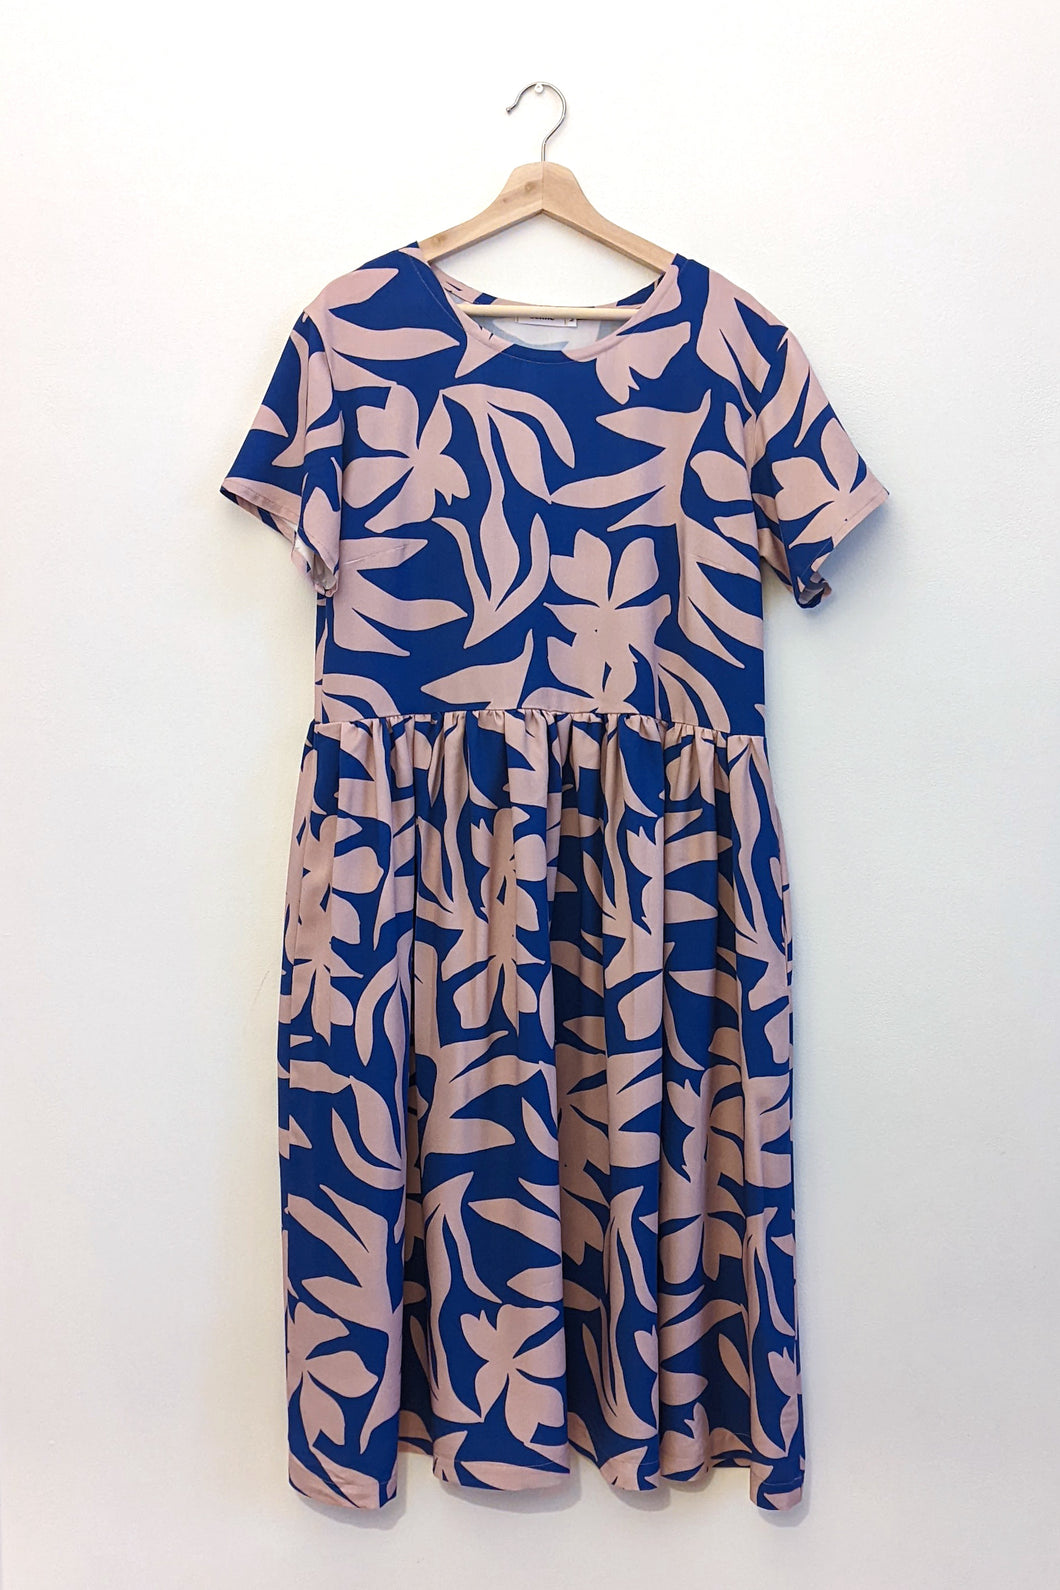 Daisy Viscose Dress - Papercut Floral (size M)